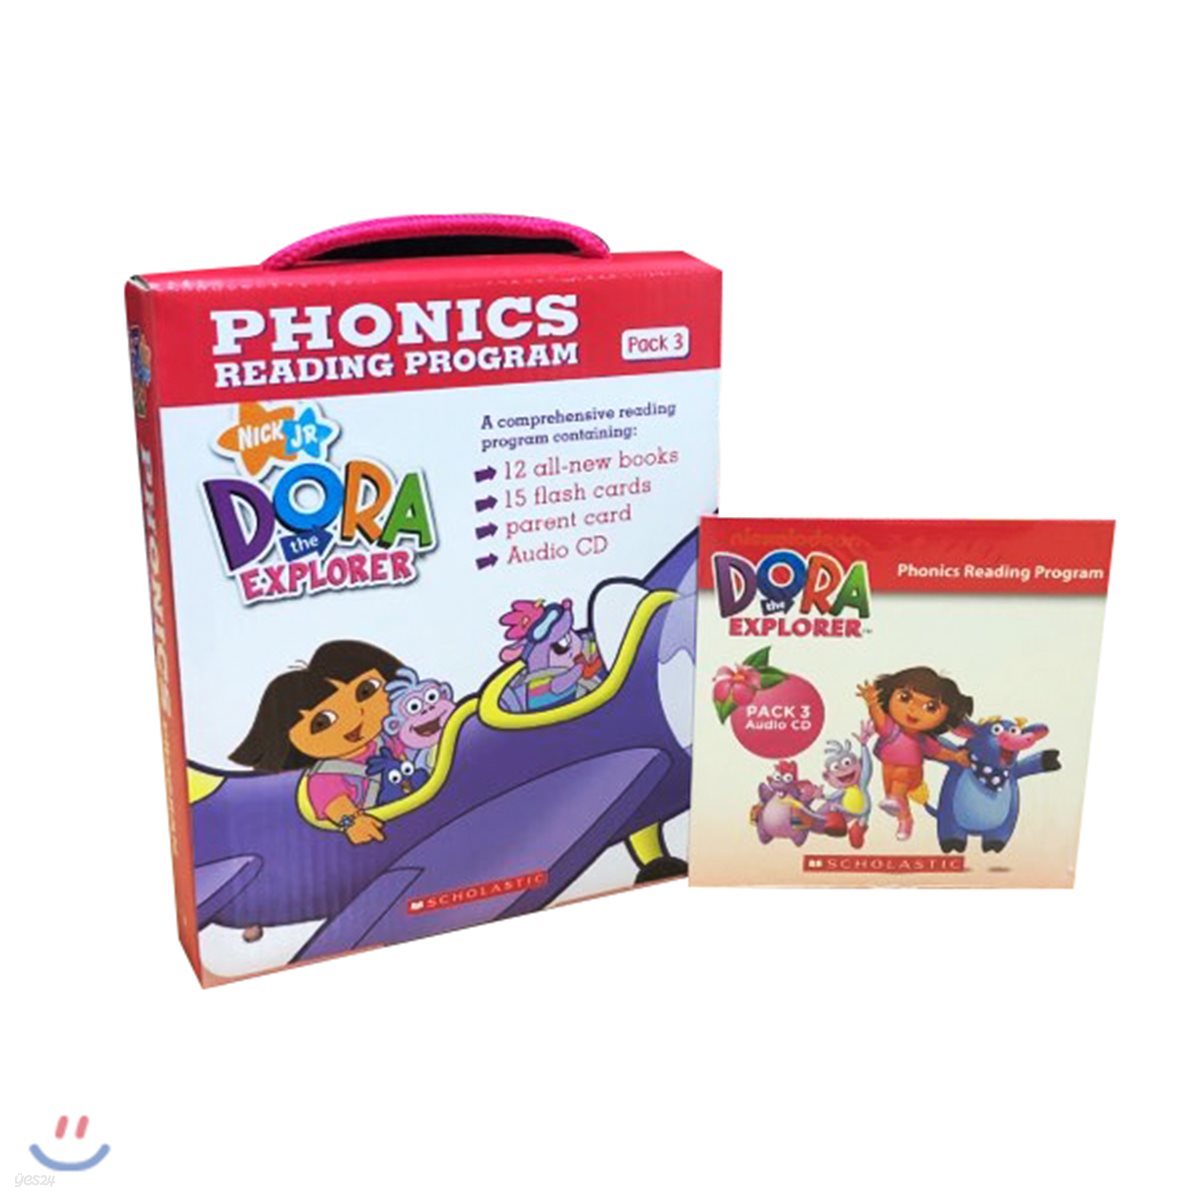 Dora The Explorer Phonics Fun Pack 3 with CD : 도라 파닉스 리더스 3